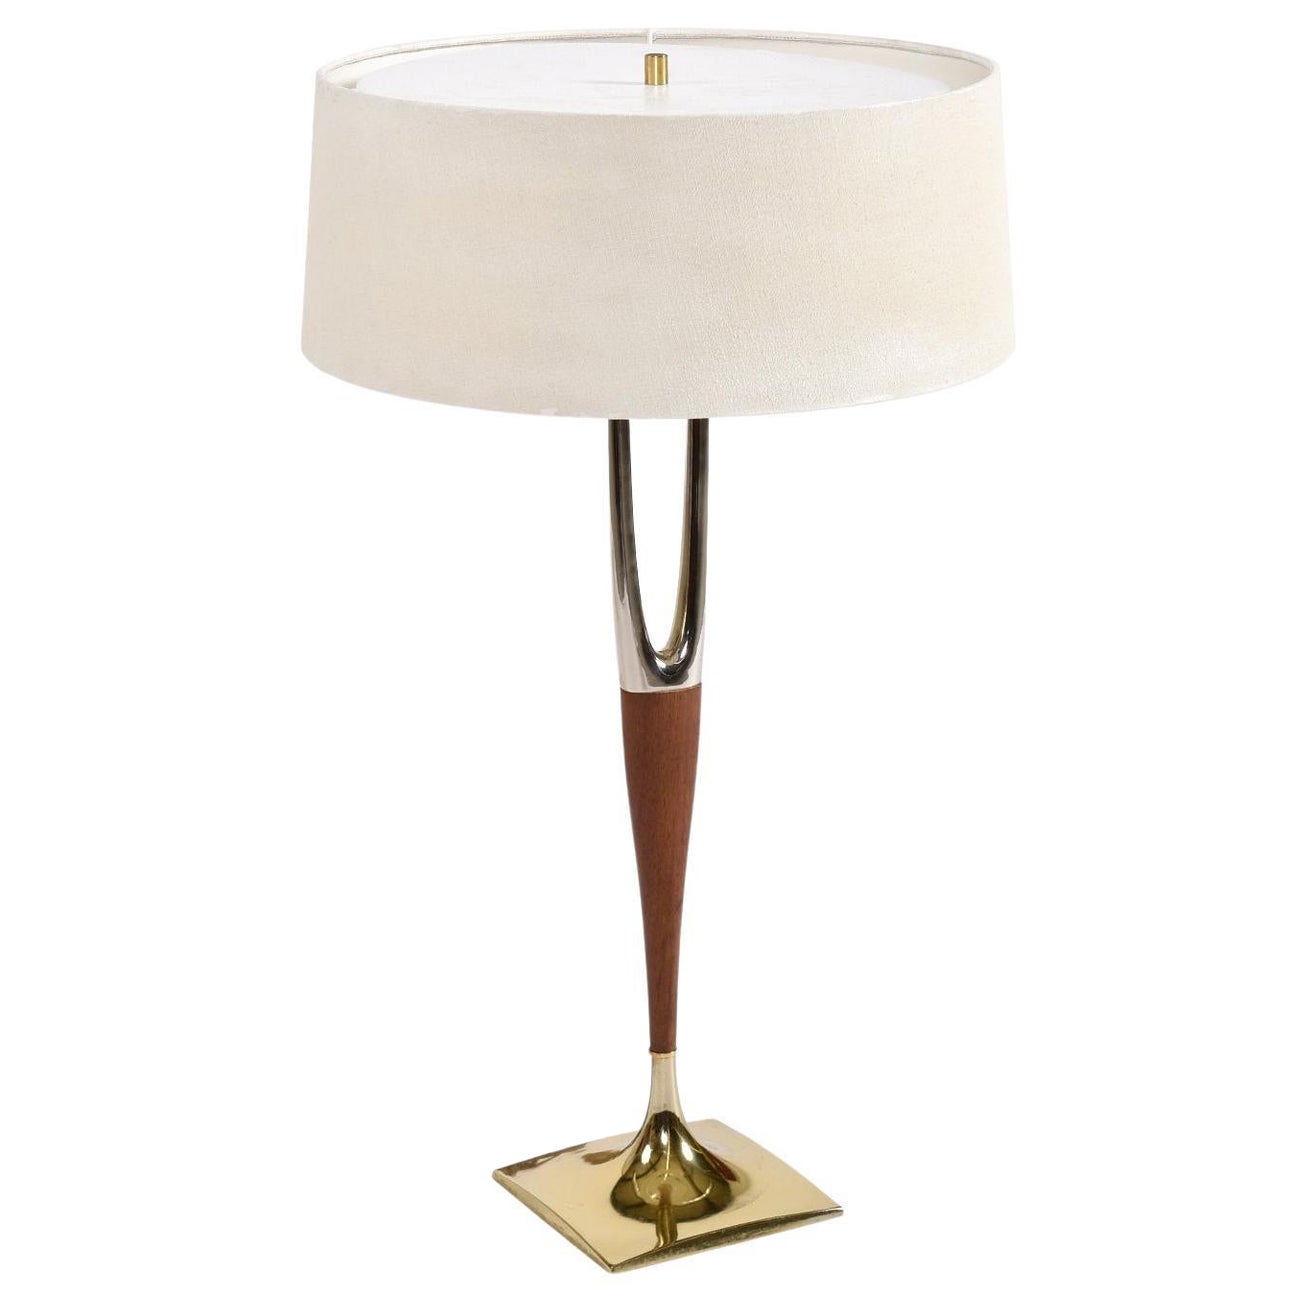 Gerald Thurston Mid-Century Modern Wishbone Lamp with Original Shade For Sale